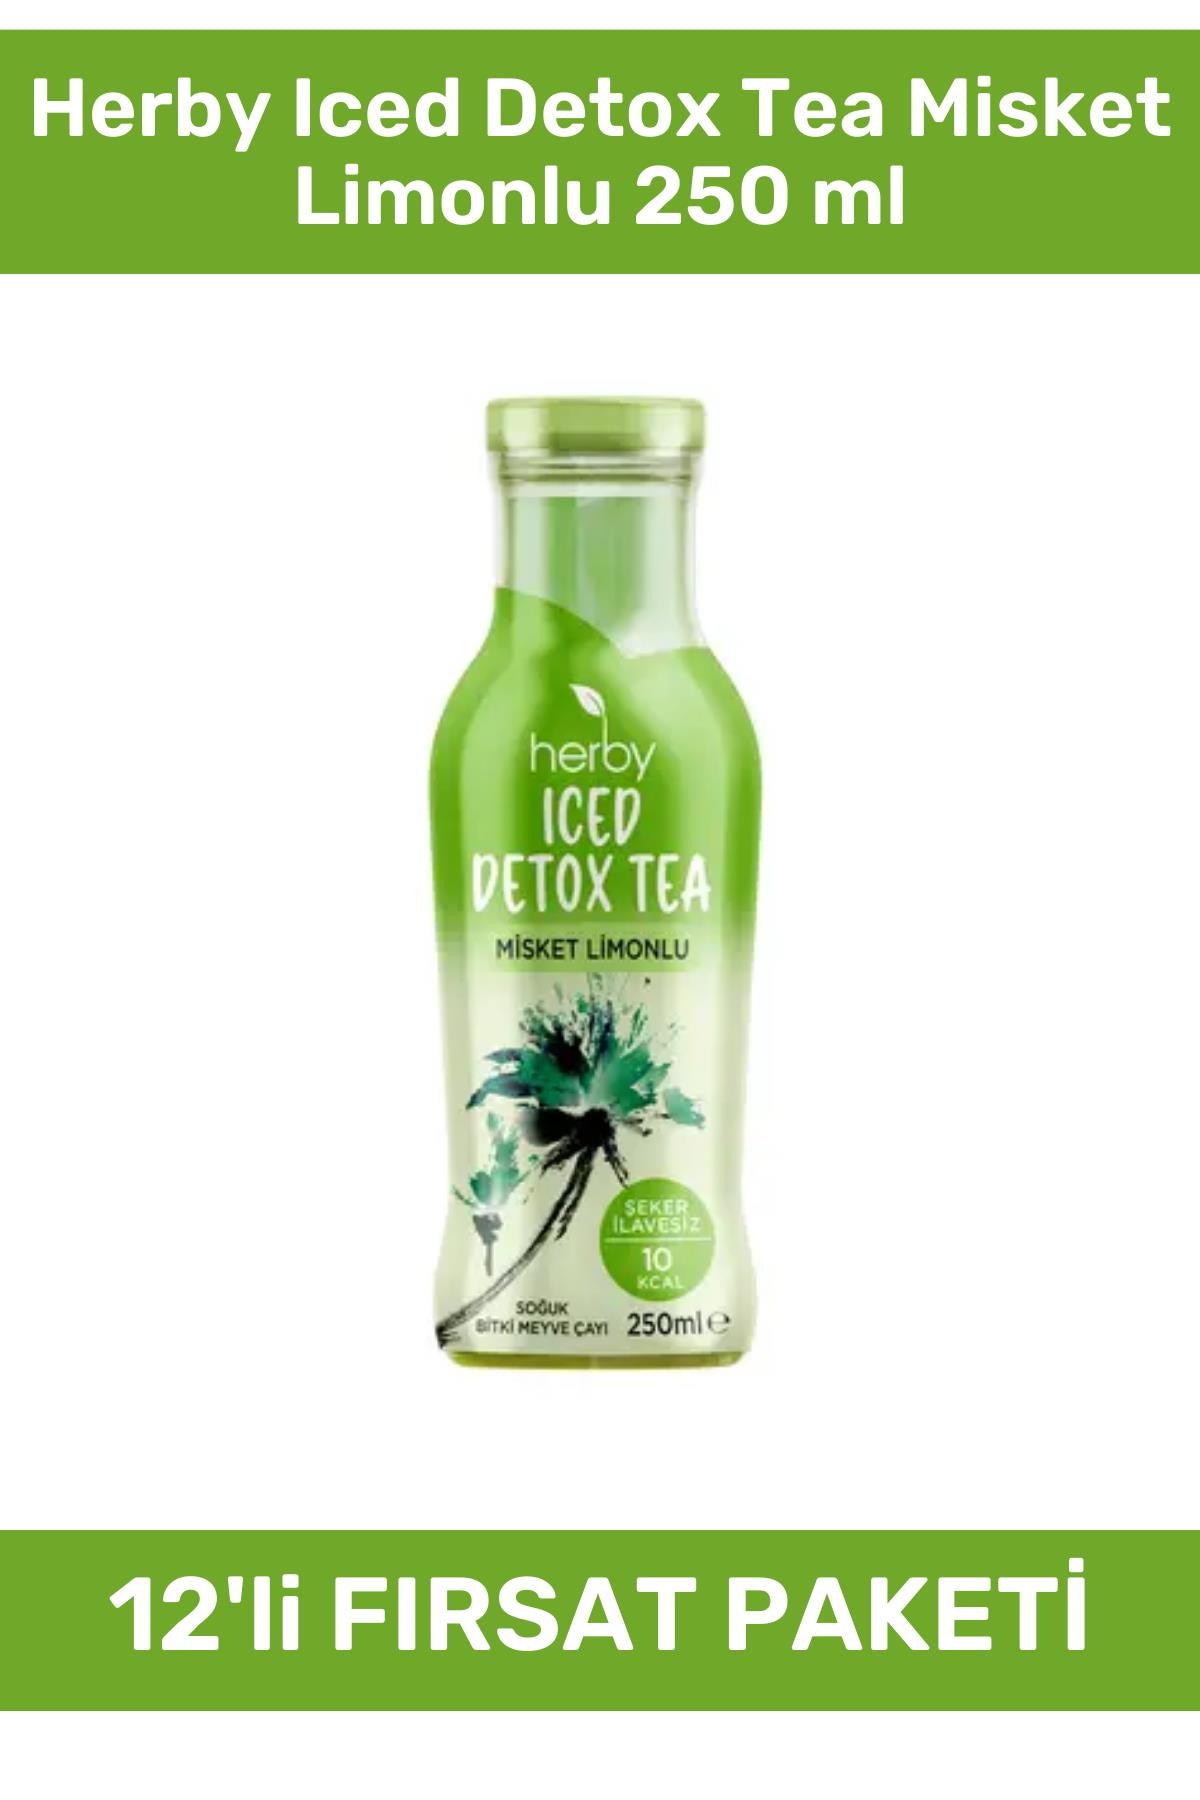 Herby Iced Detox Tea Misket Limonlu 250 ml 12'li Paket